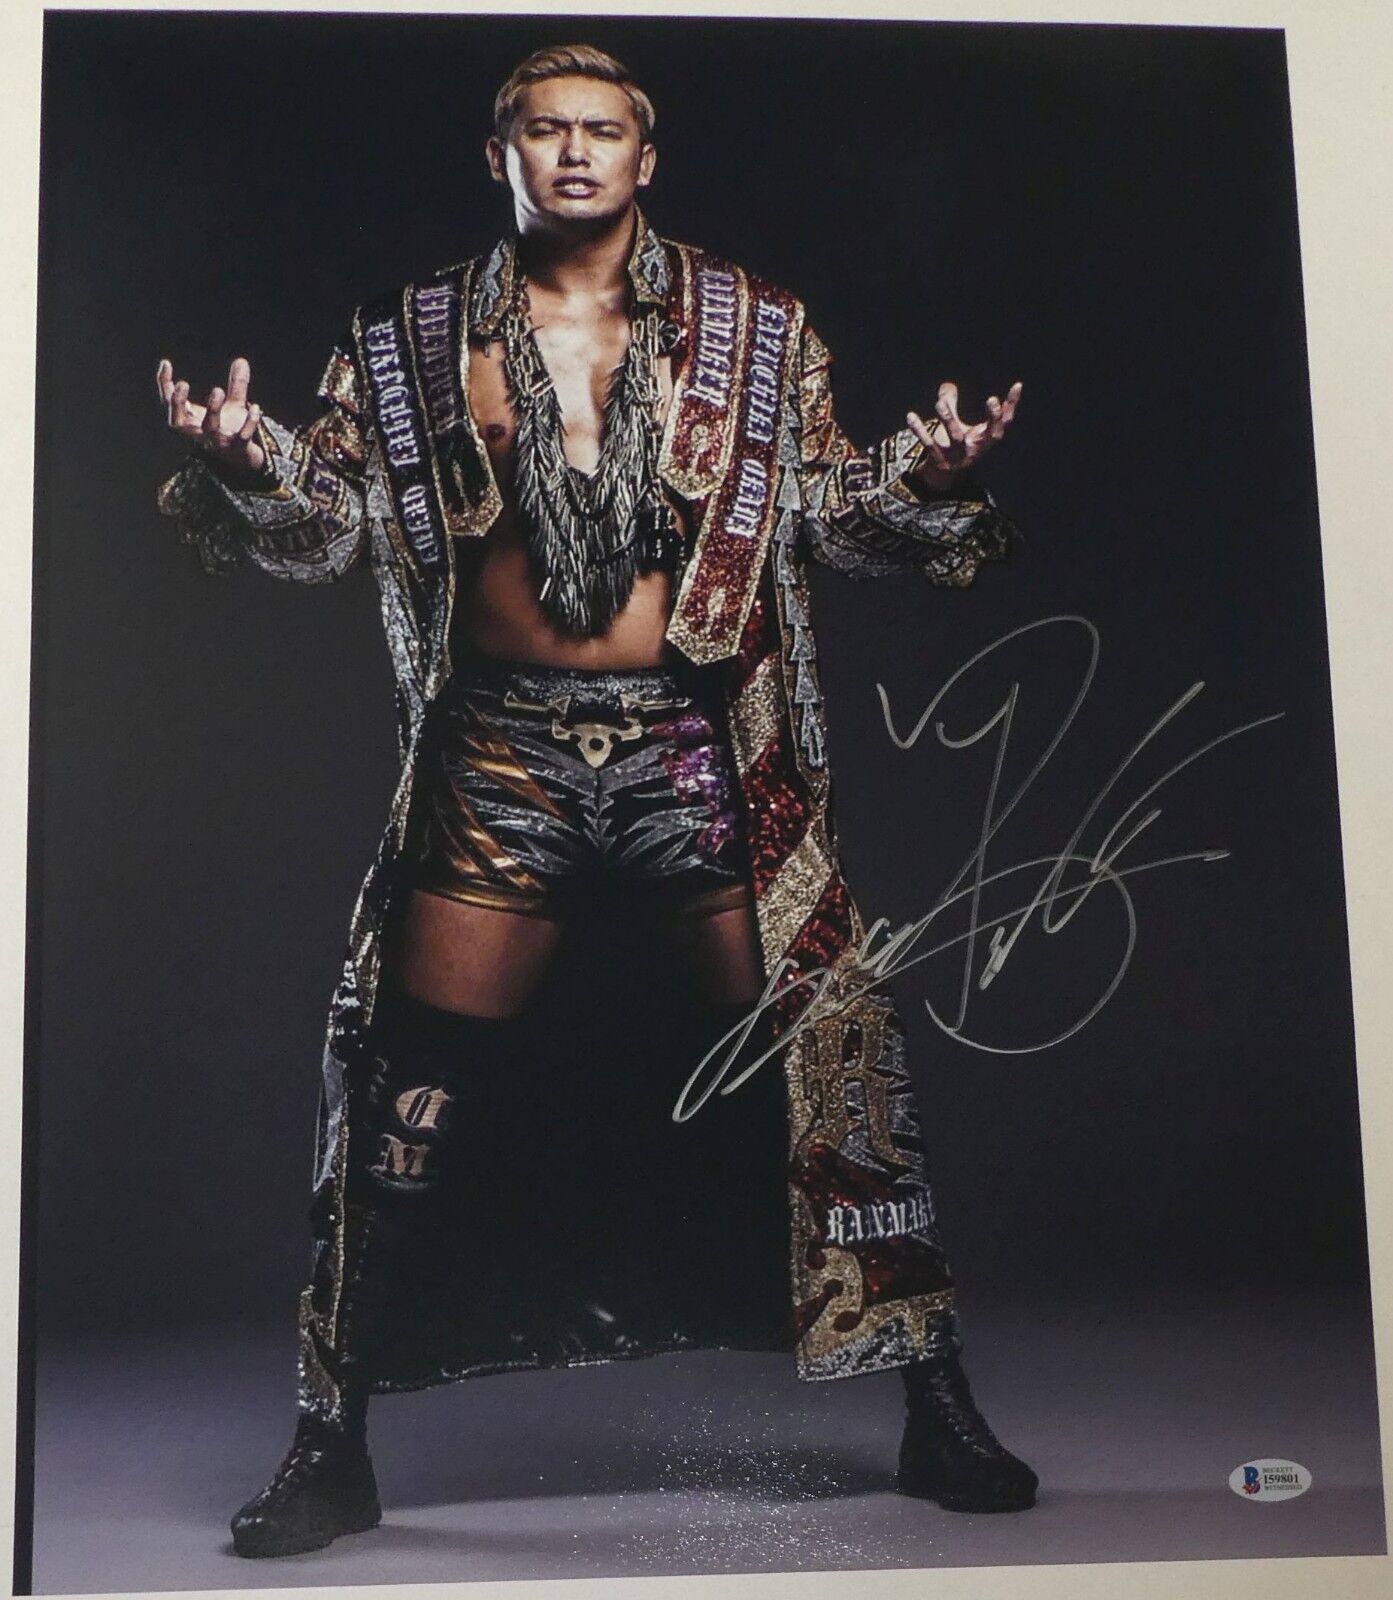 Kazuchika Okada Signed 16x20 Photo Poster painting BAS COA New Japan Pro Wrestling Rainmaker WWE